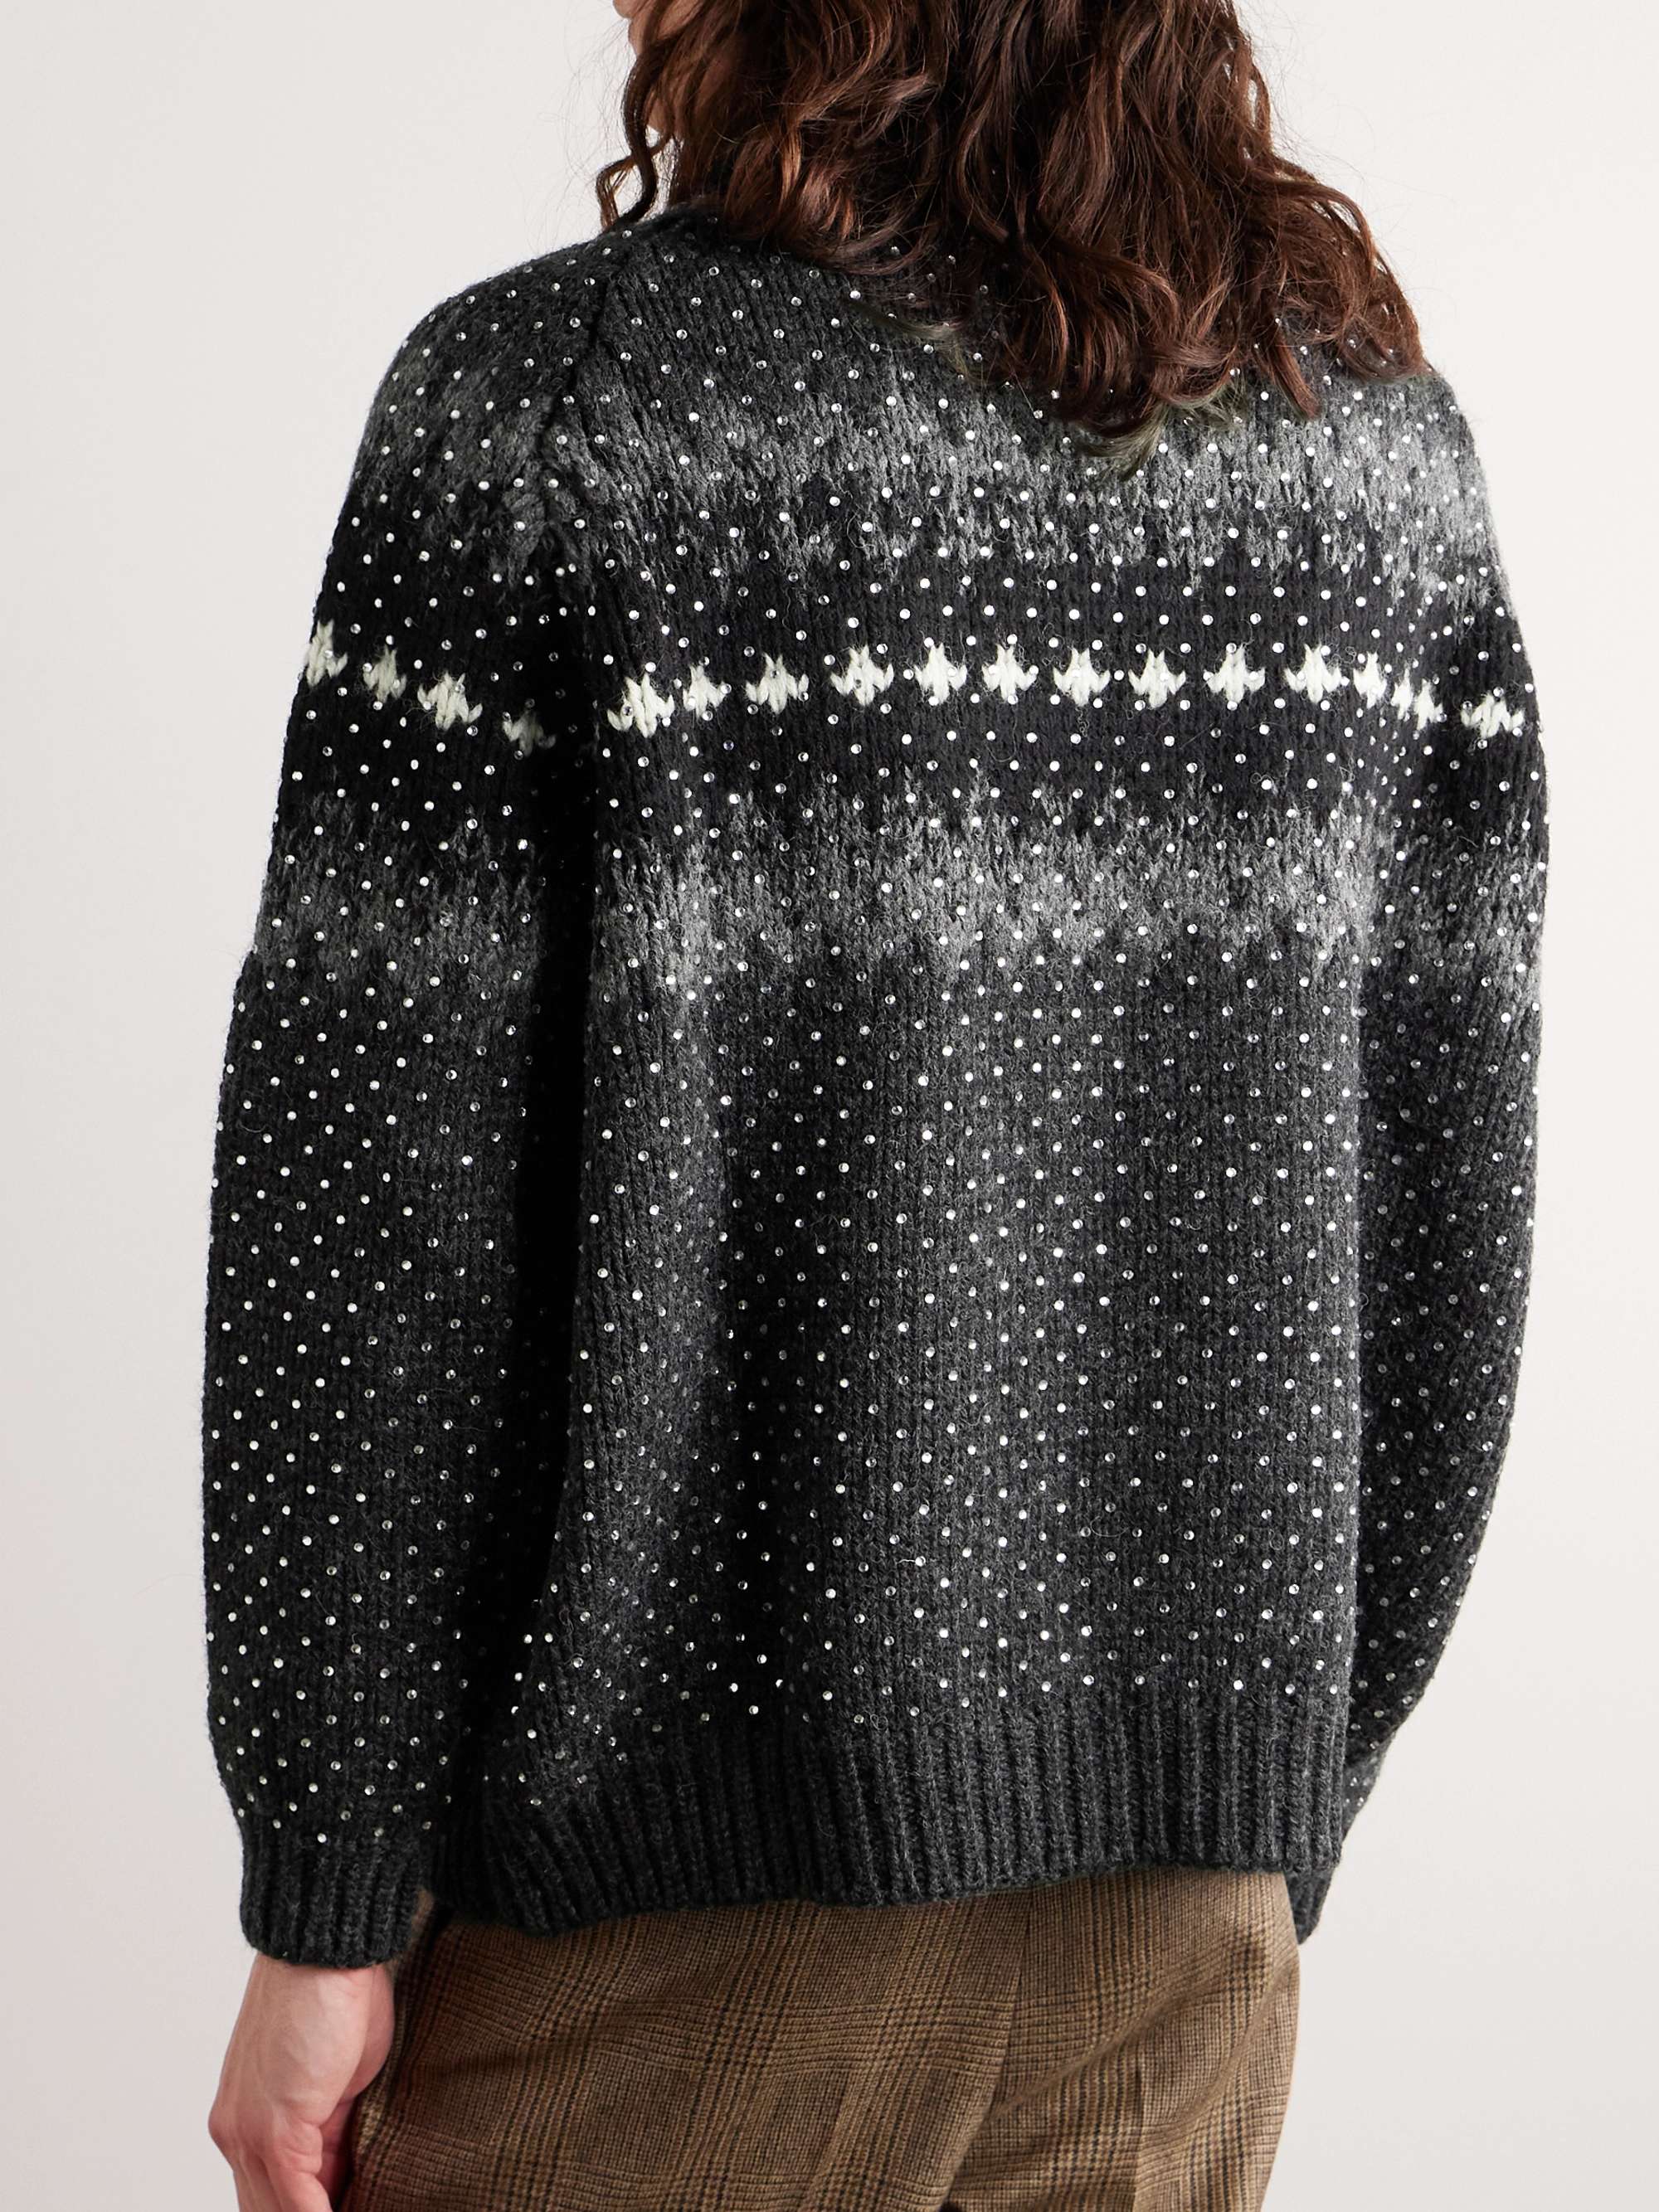 CELINE HOMME Oversized Rhinestone-Embellished Fair Isle Wool Sweater